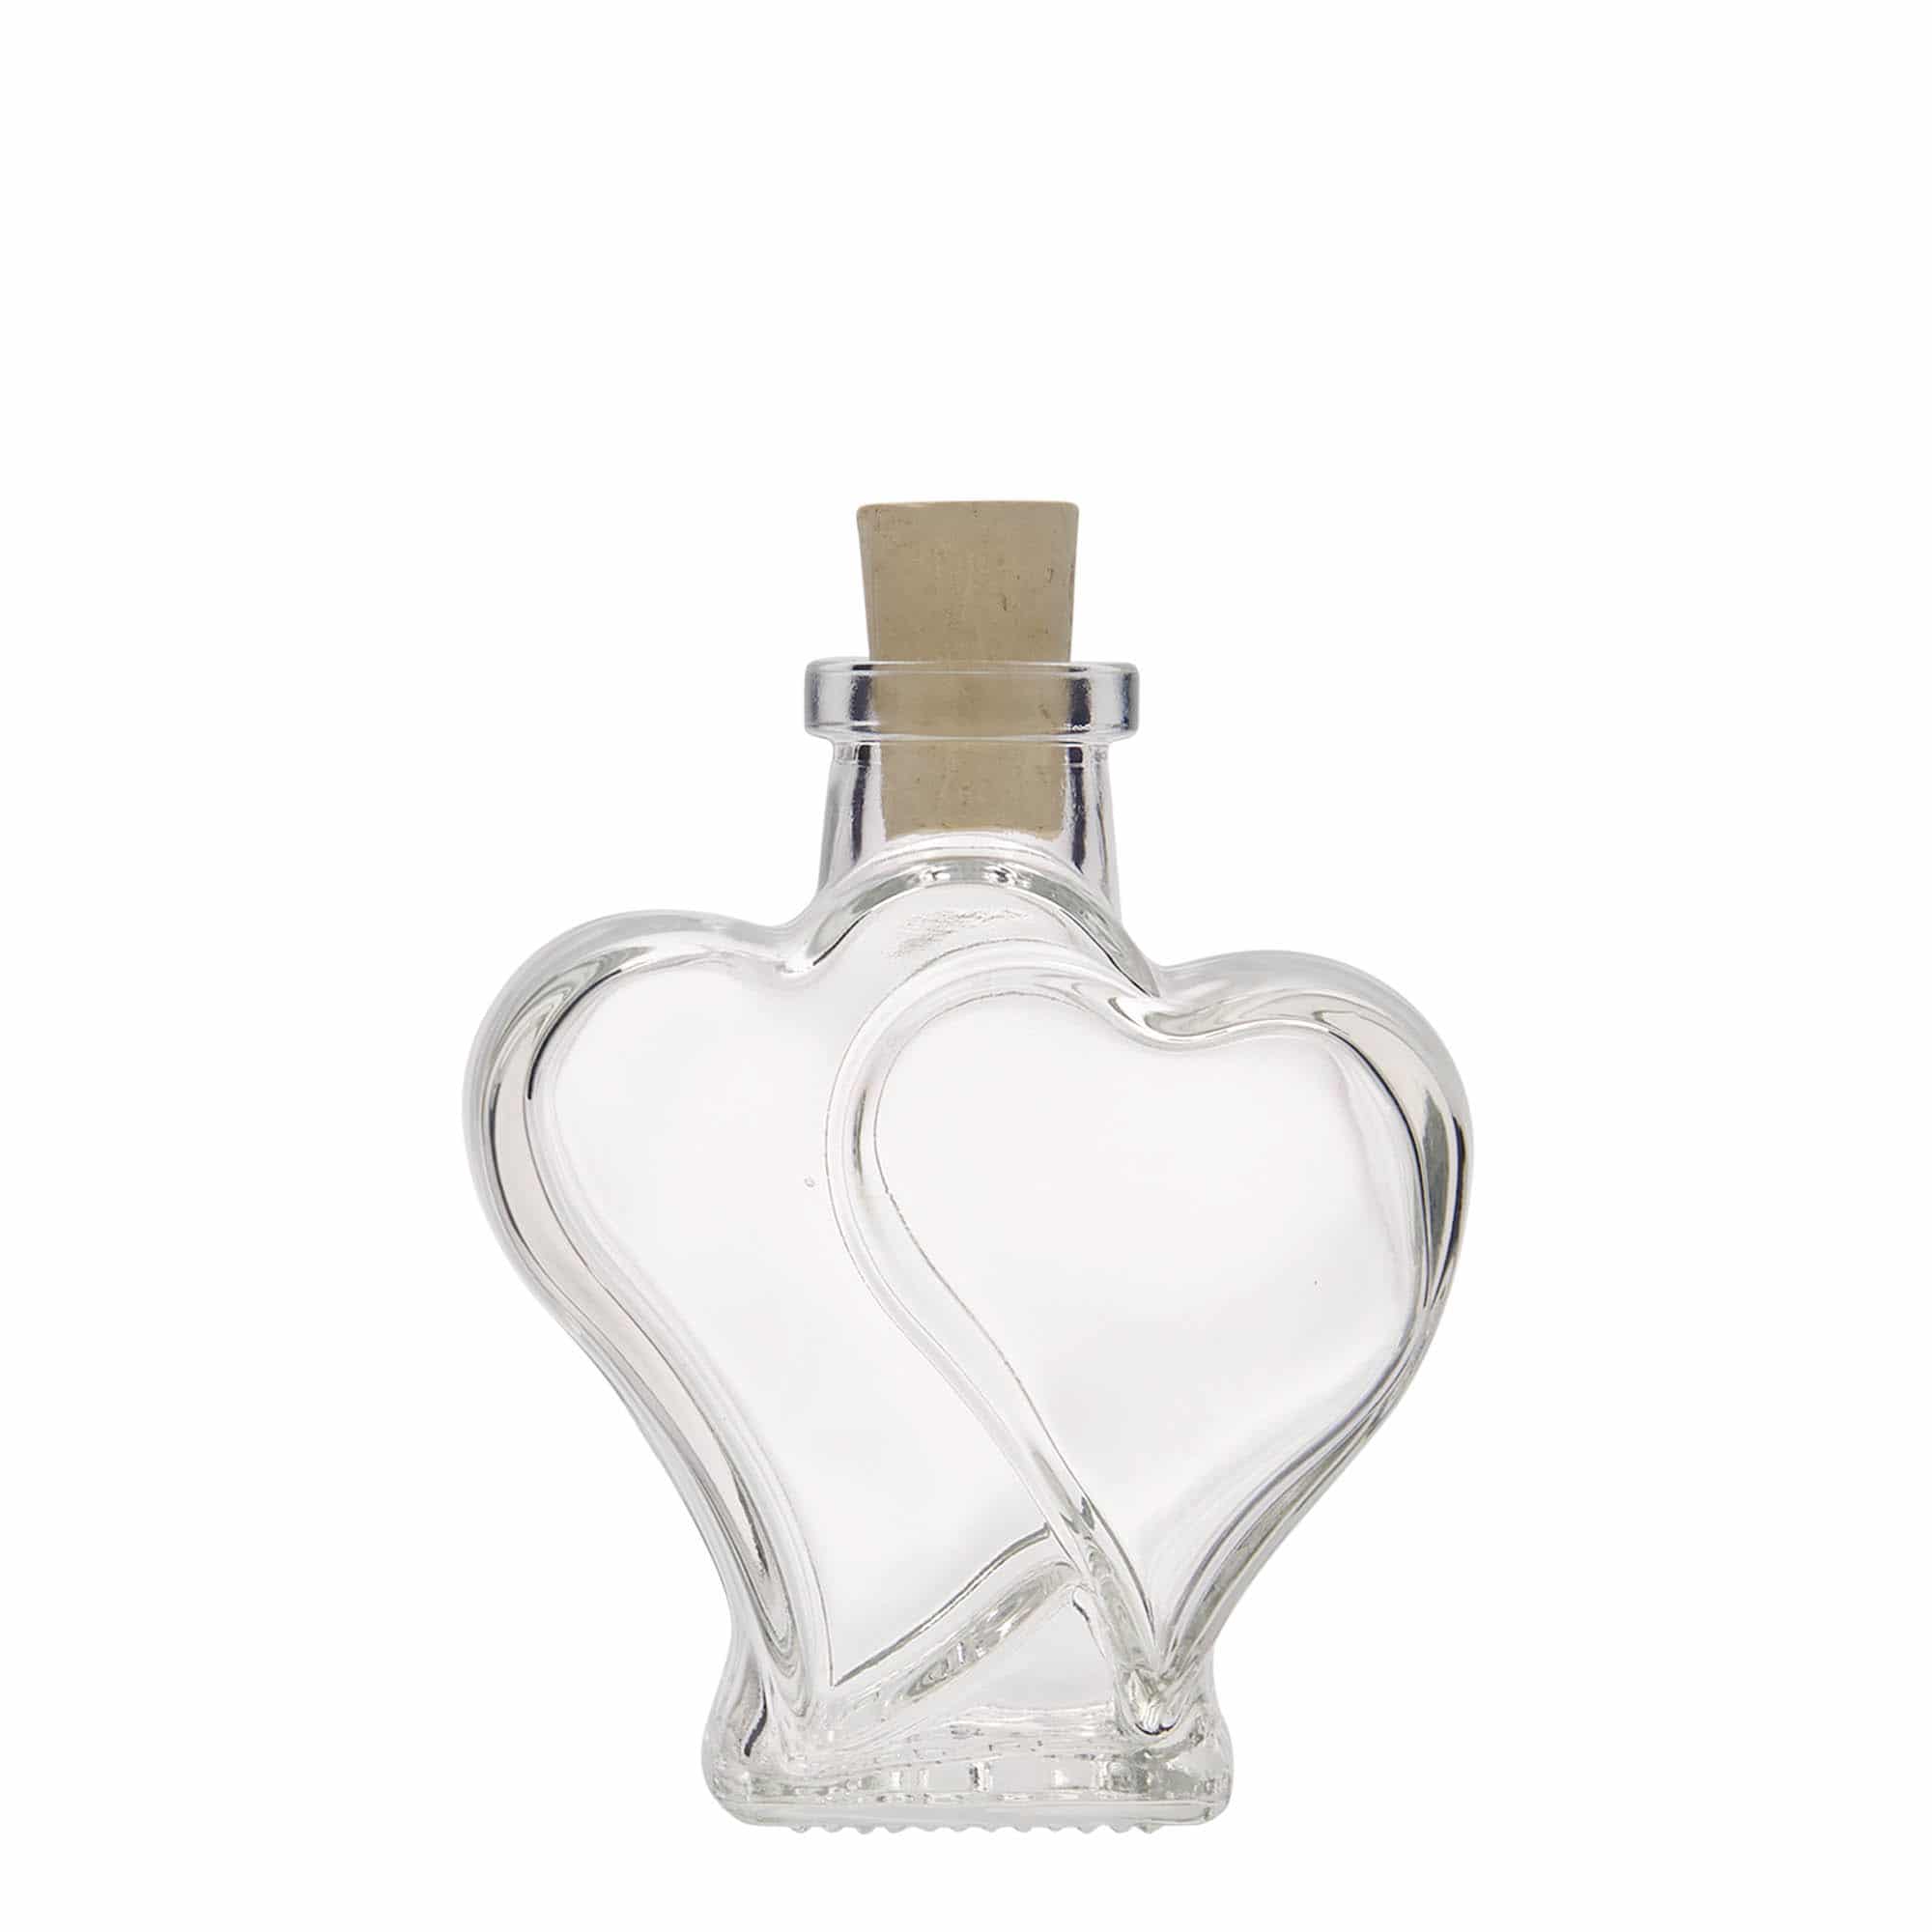 200 ml glass bottle 'Double Heart', closure: cork